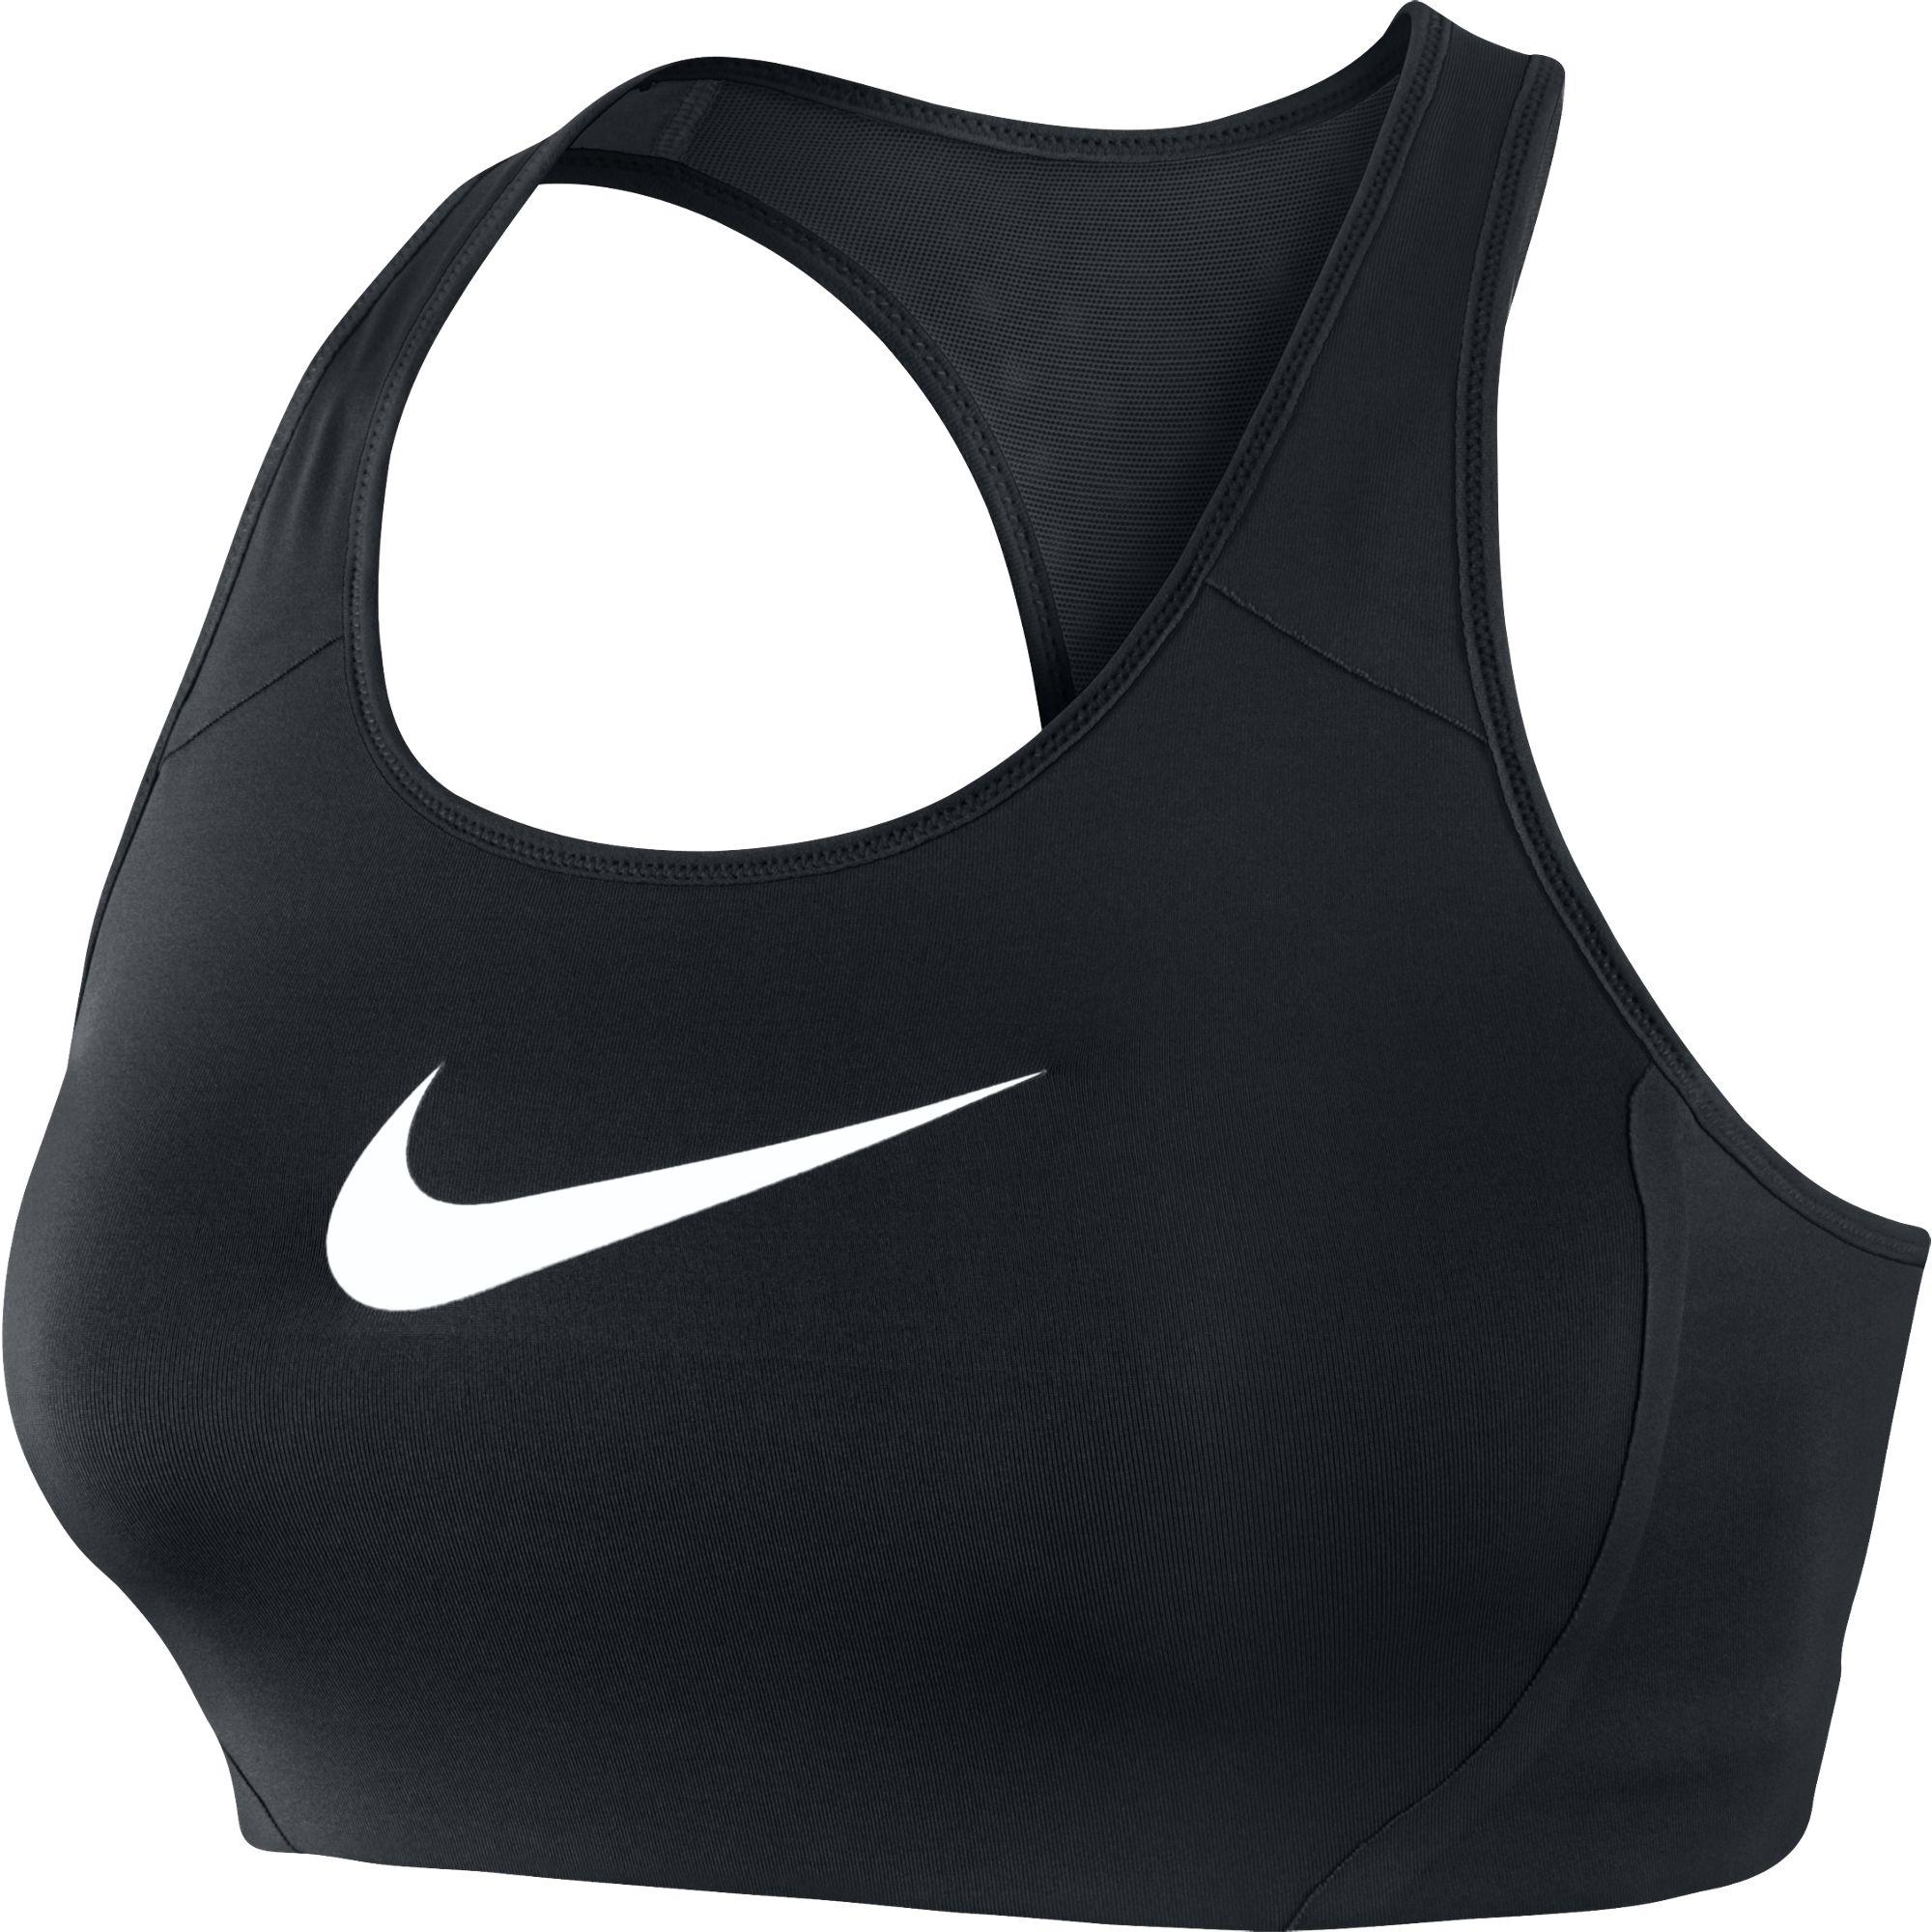 Nike Shape Swoosh Sports Bra - Black/White - Tennisnuts.com